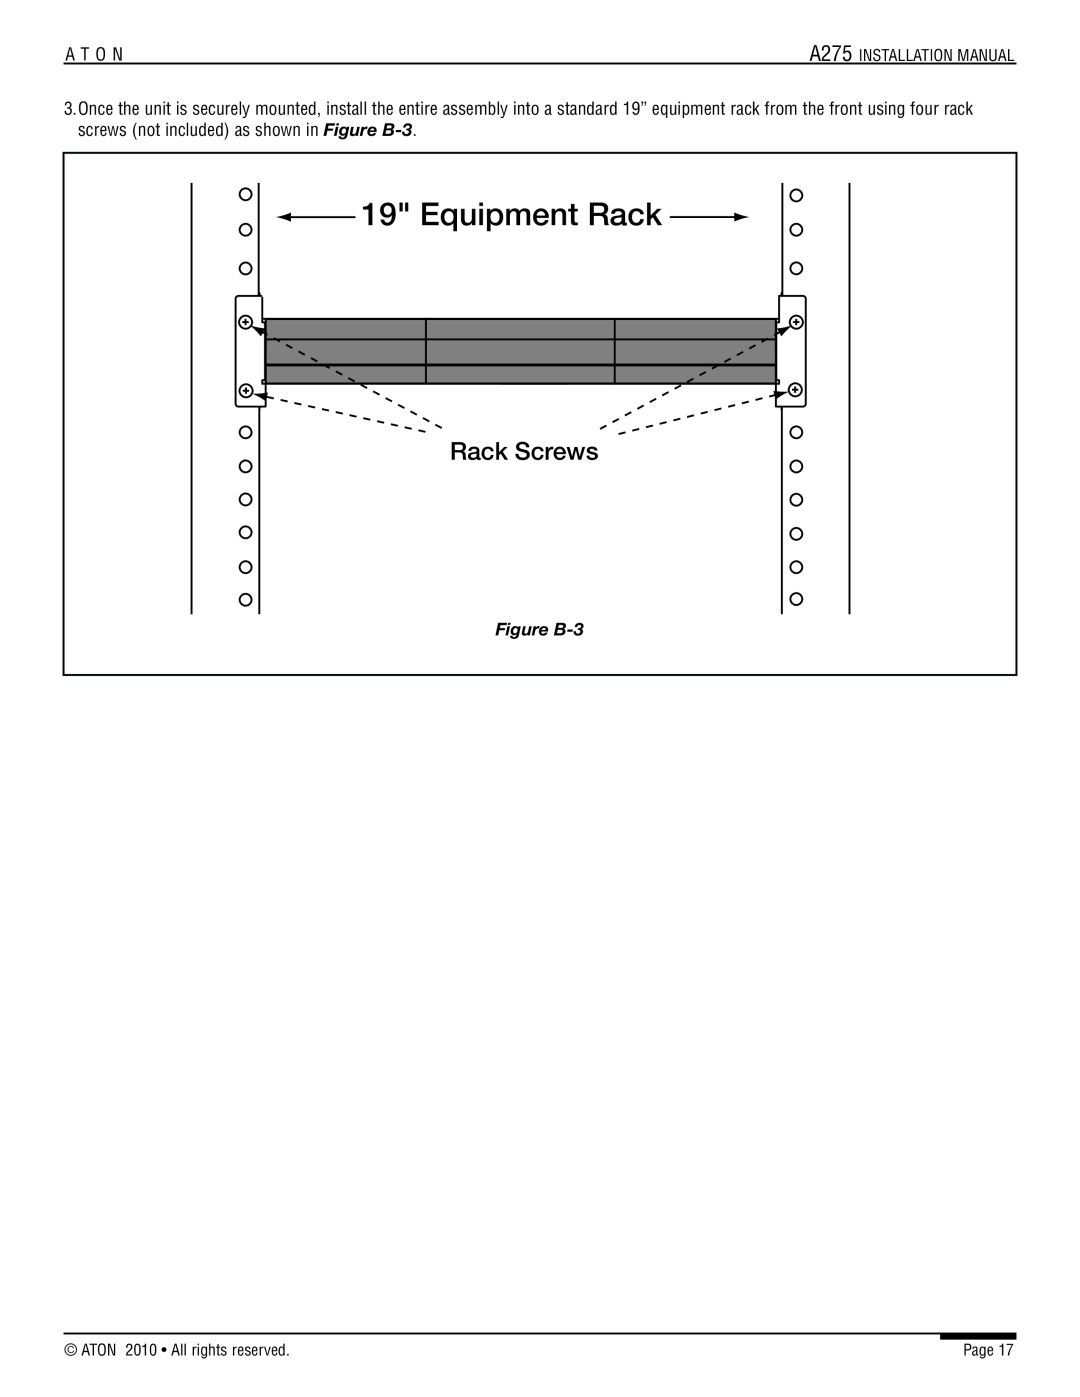 ATON A275 installation manual Equipment Rack, Rack Screws, Figure B-3 